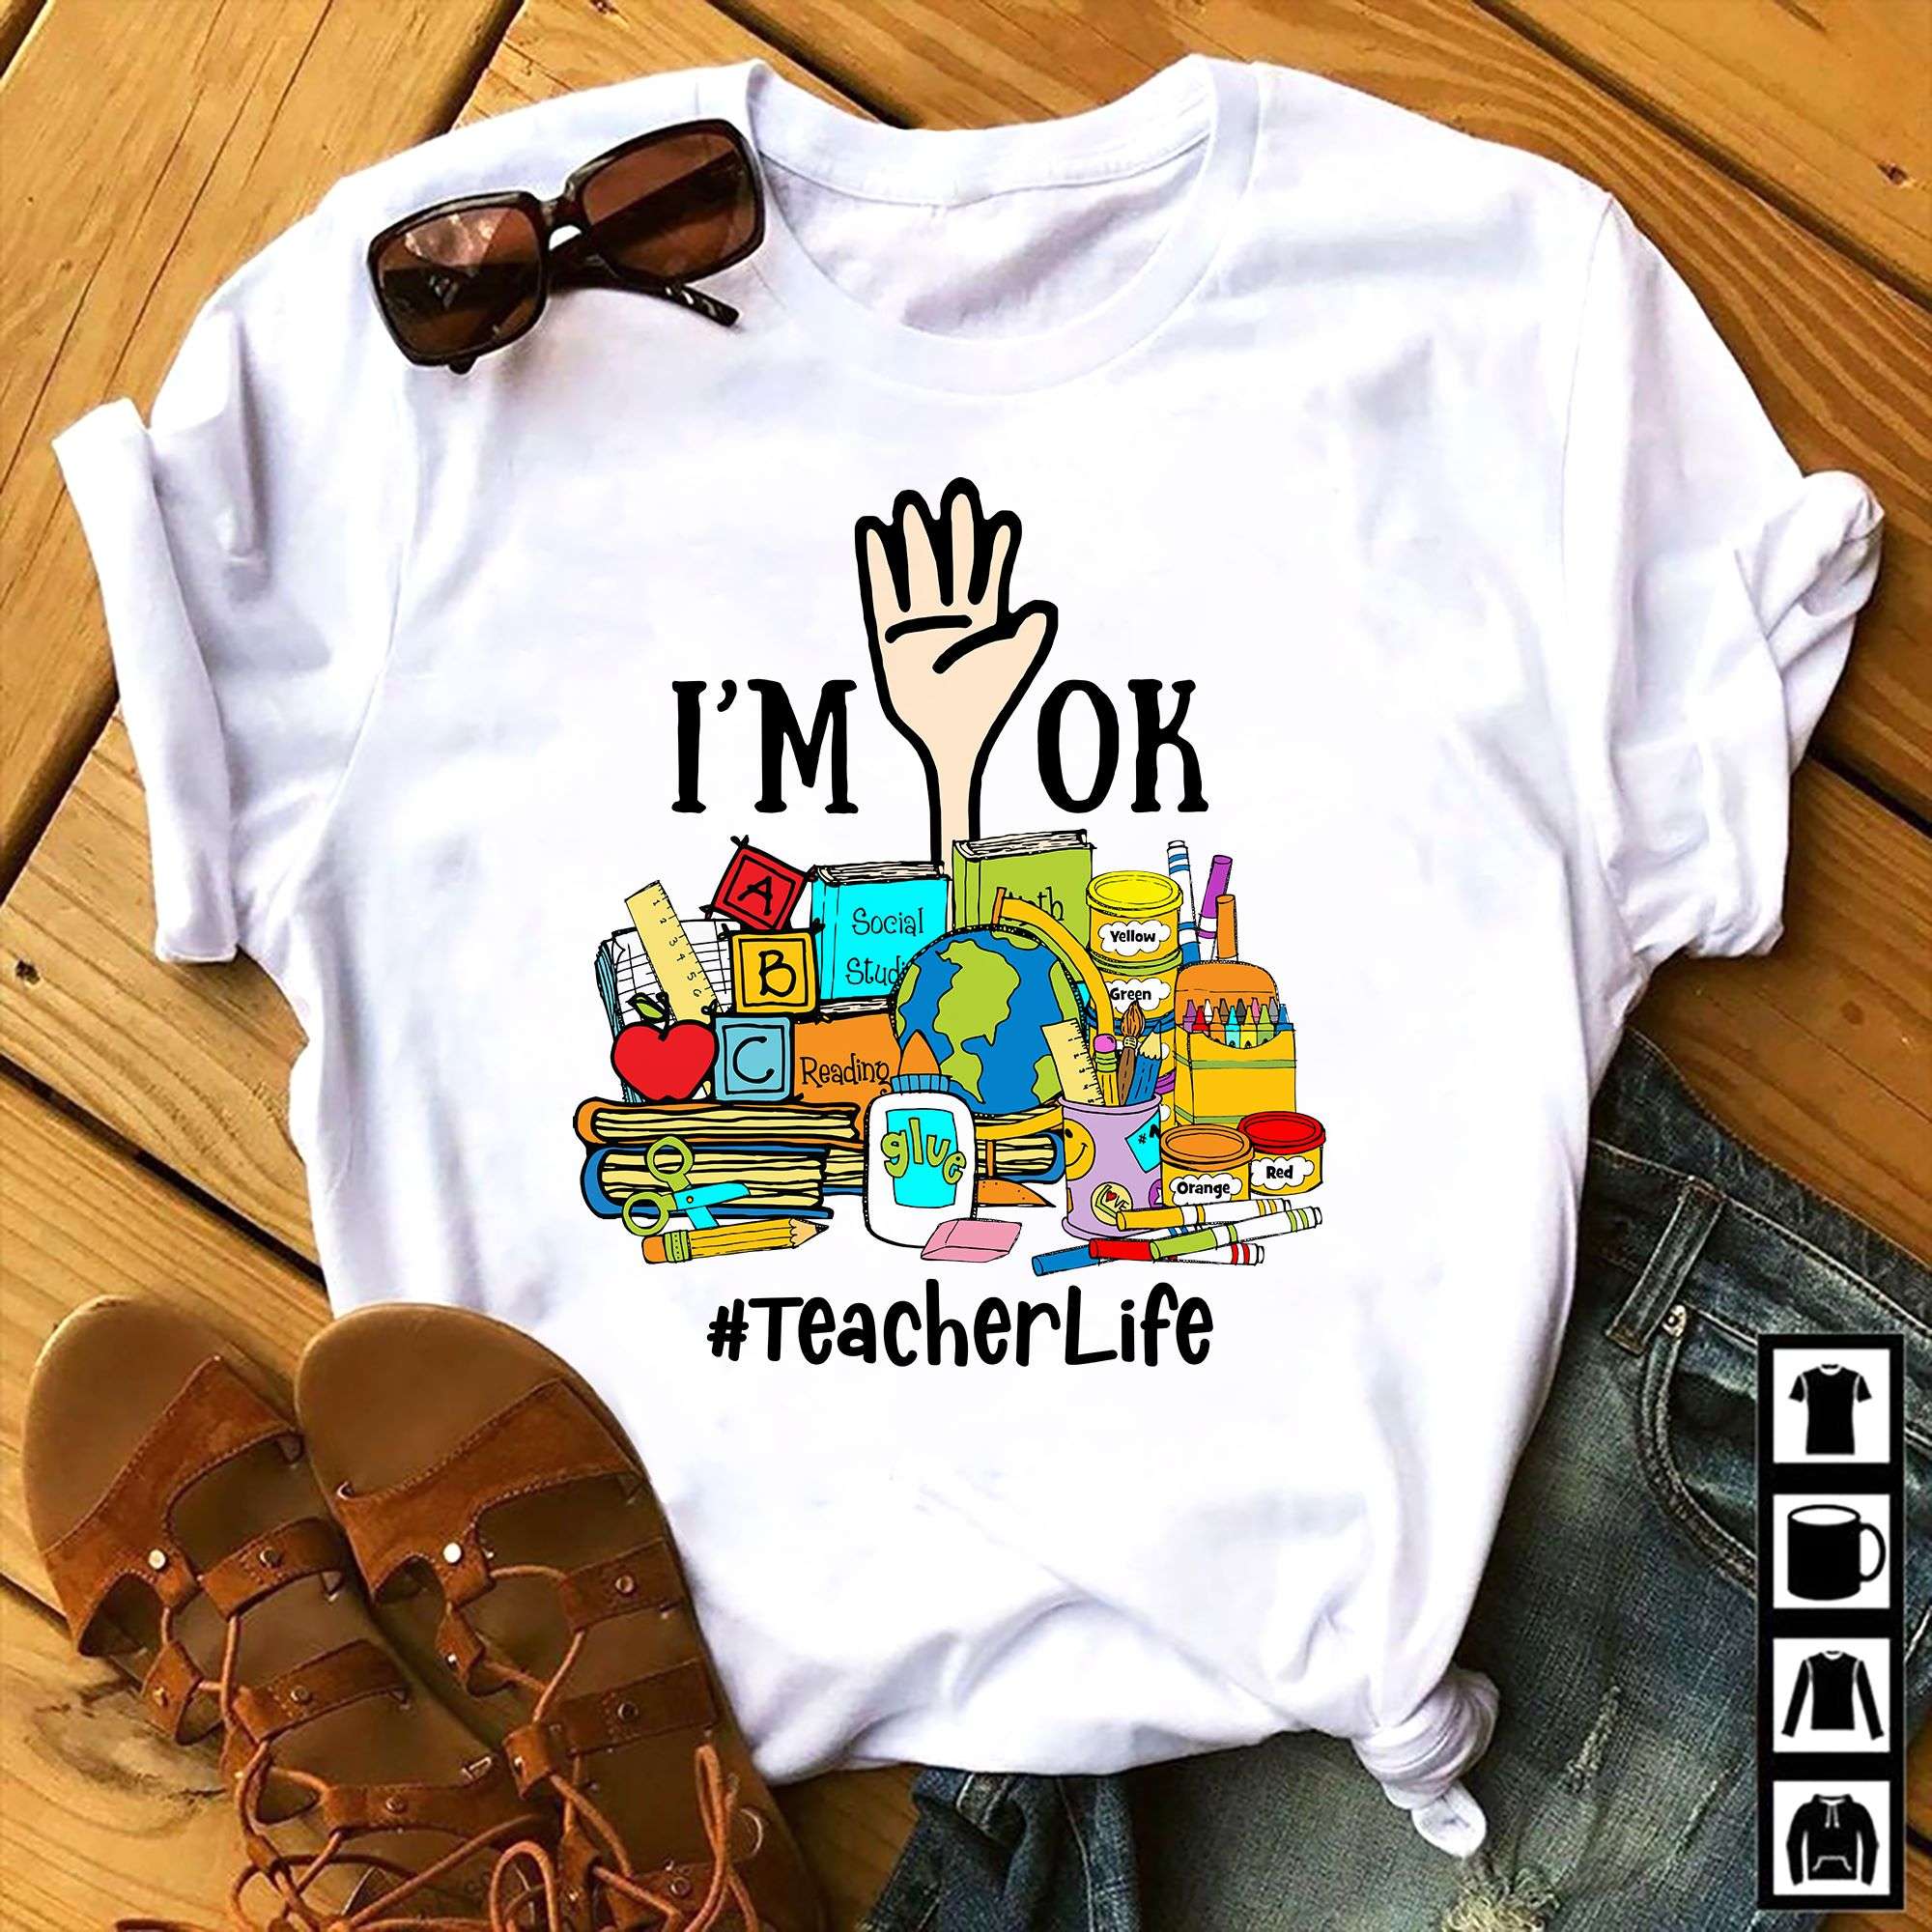 I'm ok - Teacher life, T-shirt for teacher, teacher the educational job